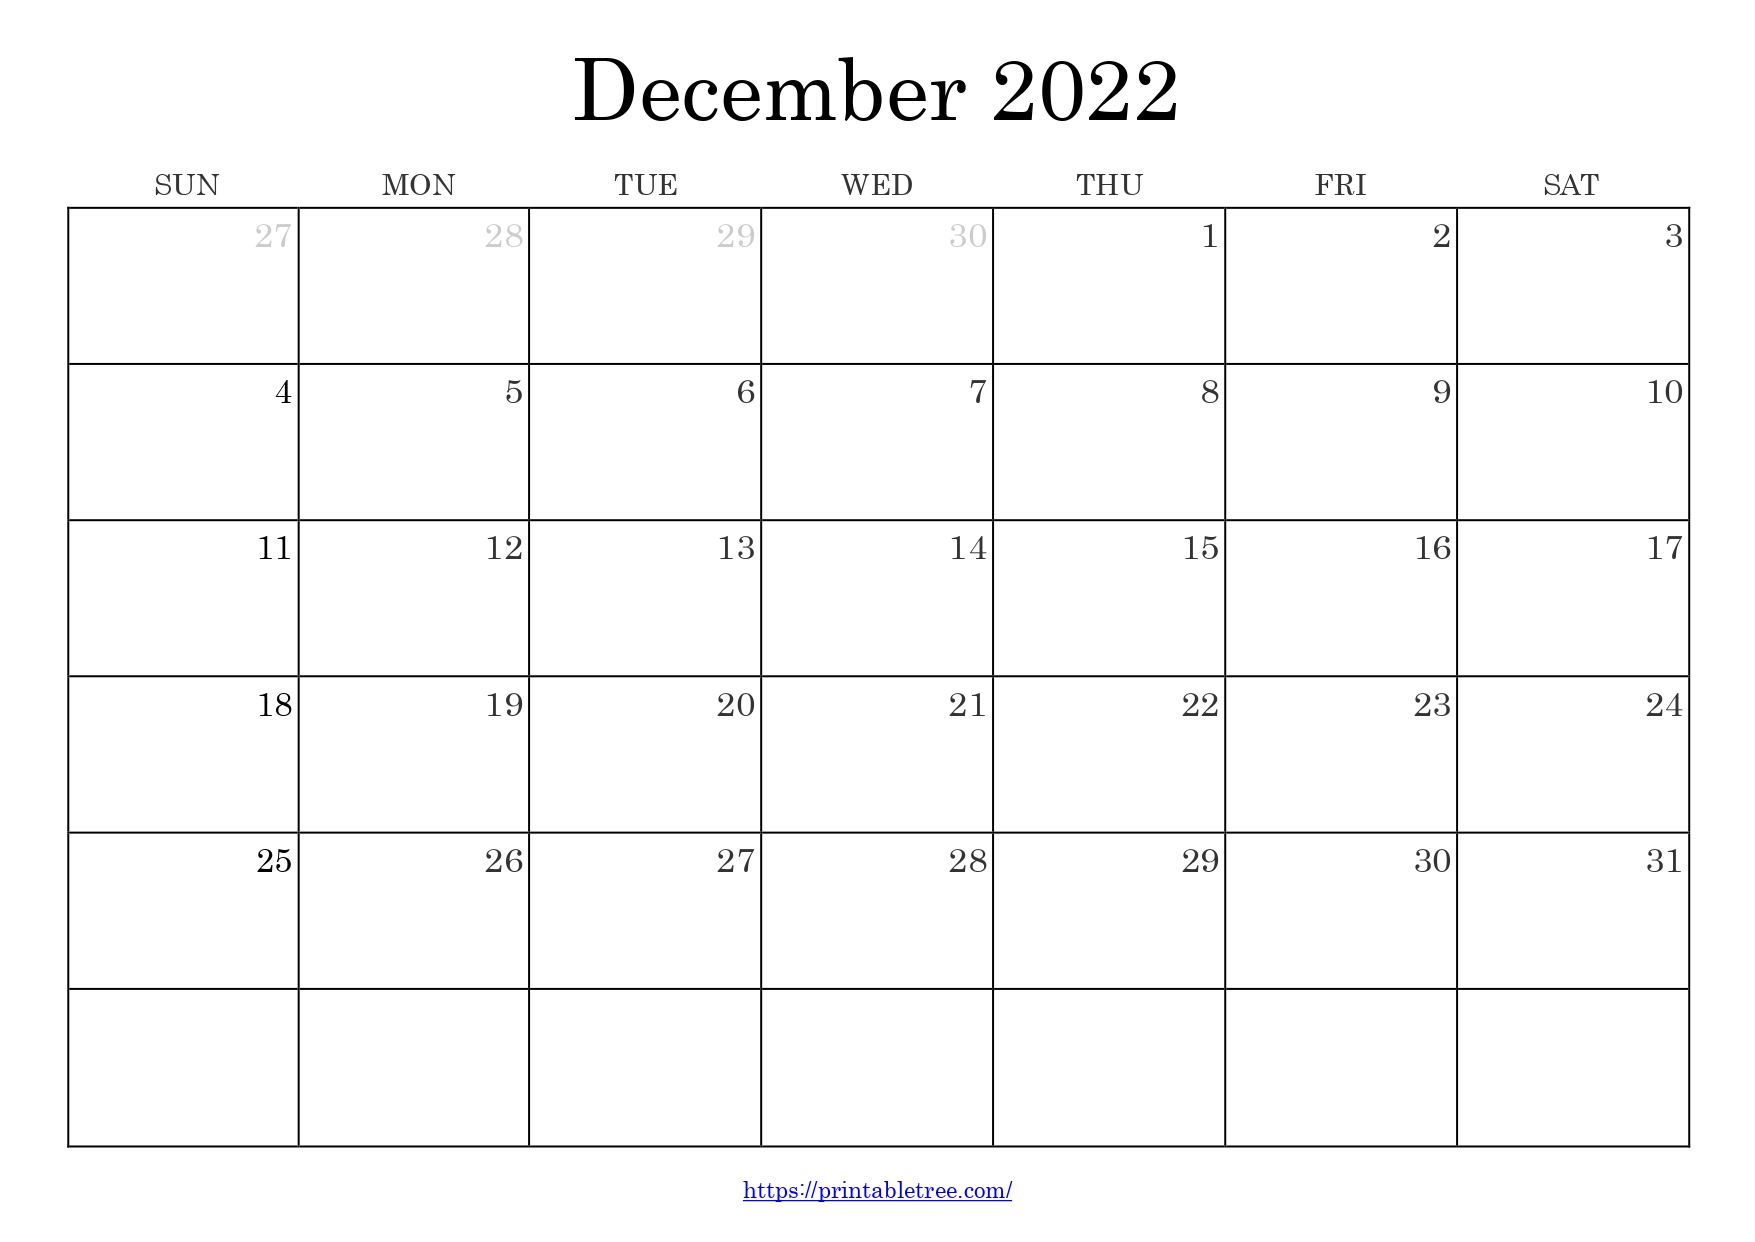 December 2022 Calendar Template Printable ZOHAL